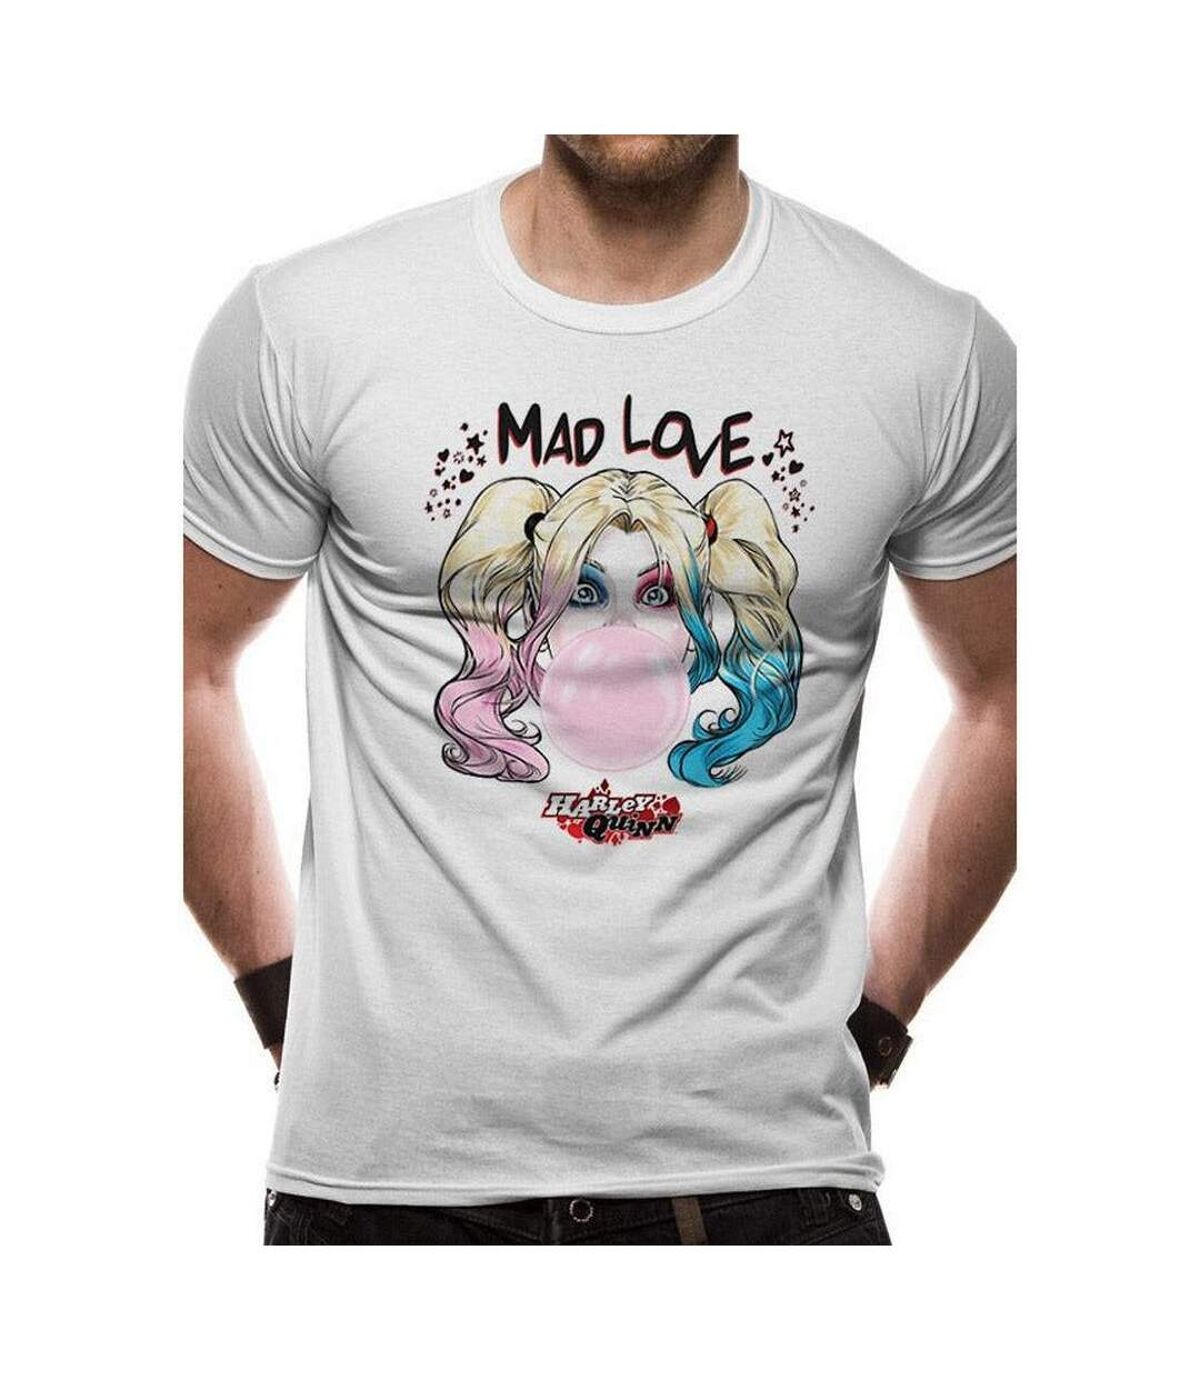 Harley Quinn - T-shirt - Adulte (Blanc) - UTBN4485